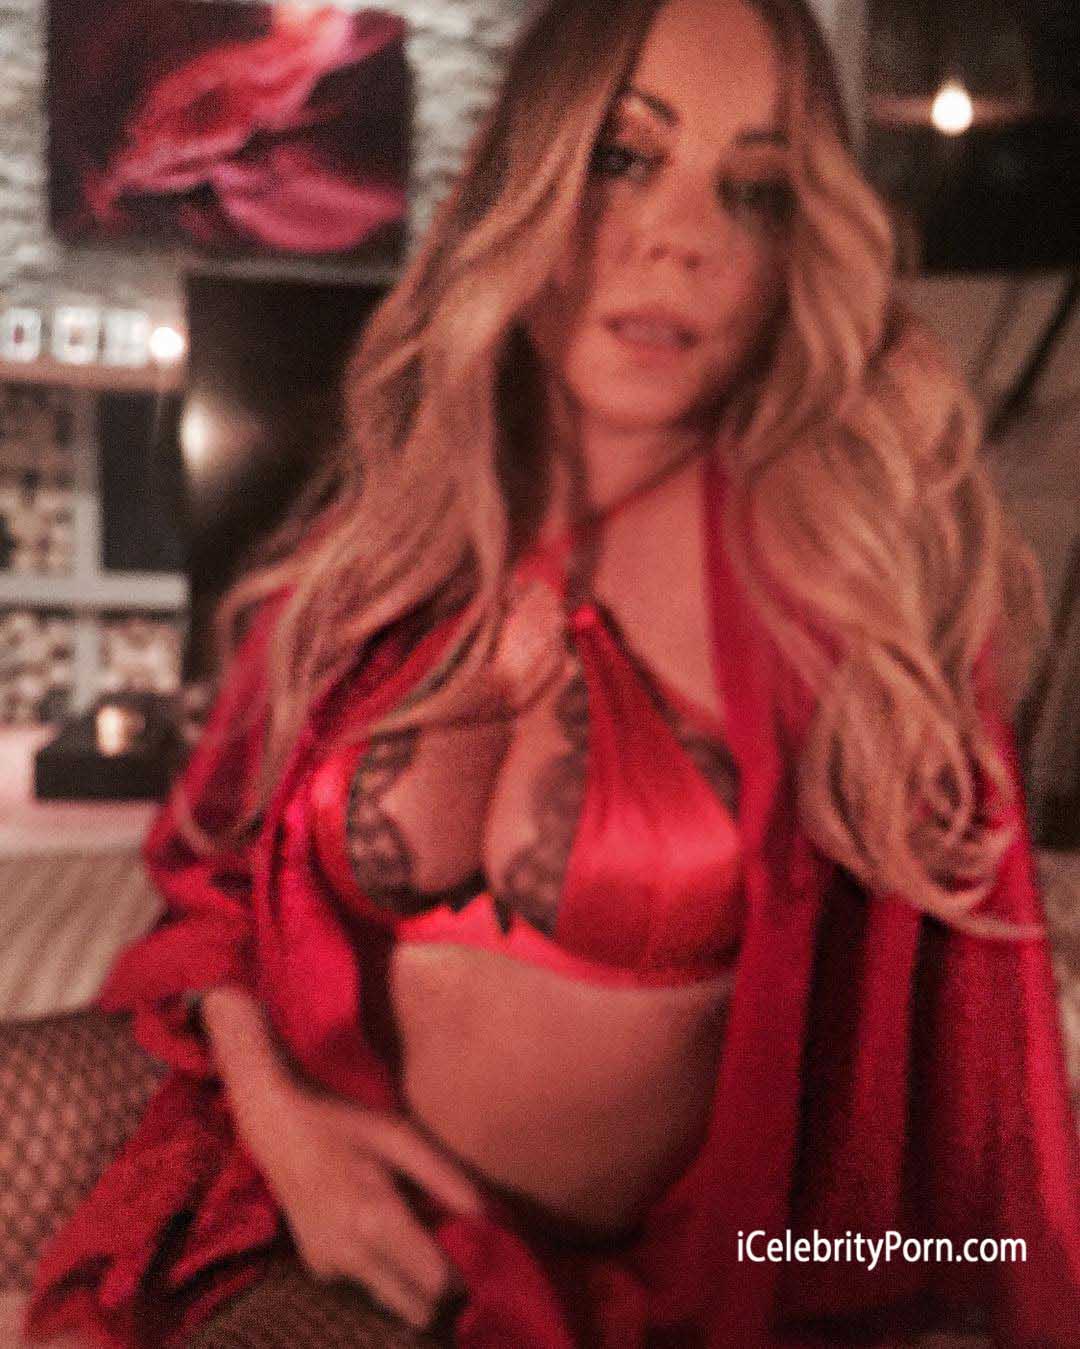 Mariah Carey Xxx - Mariah Carey desnuda enseÃ±a sus grandes tetas en la baÃ±era